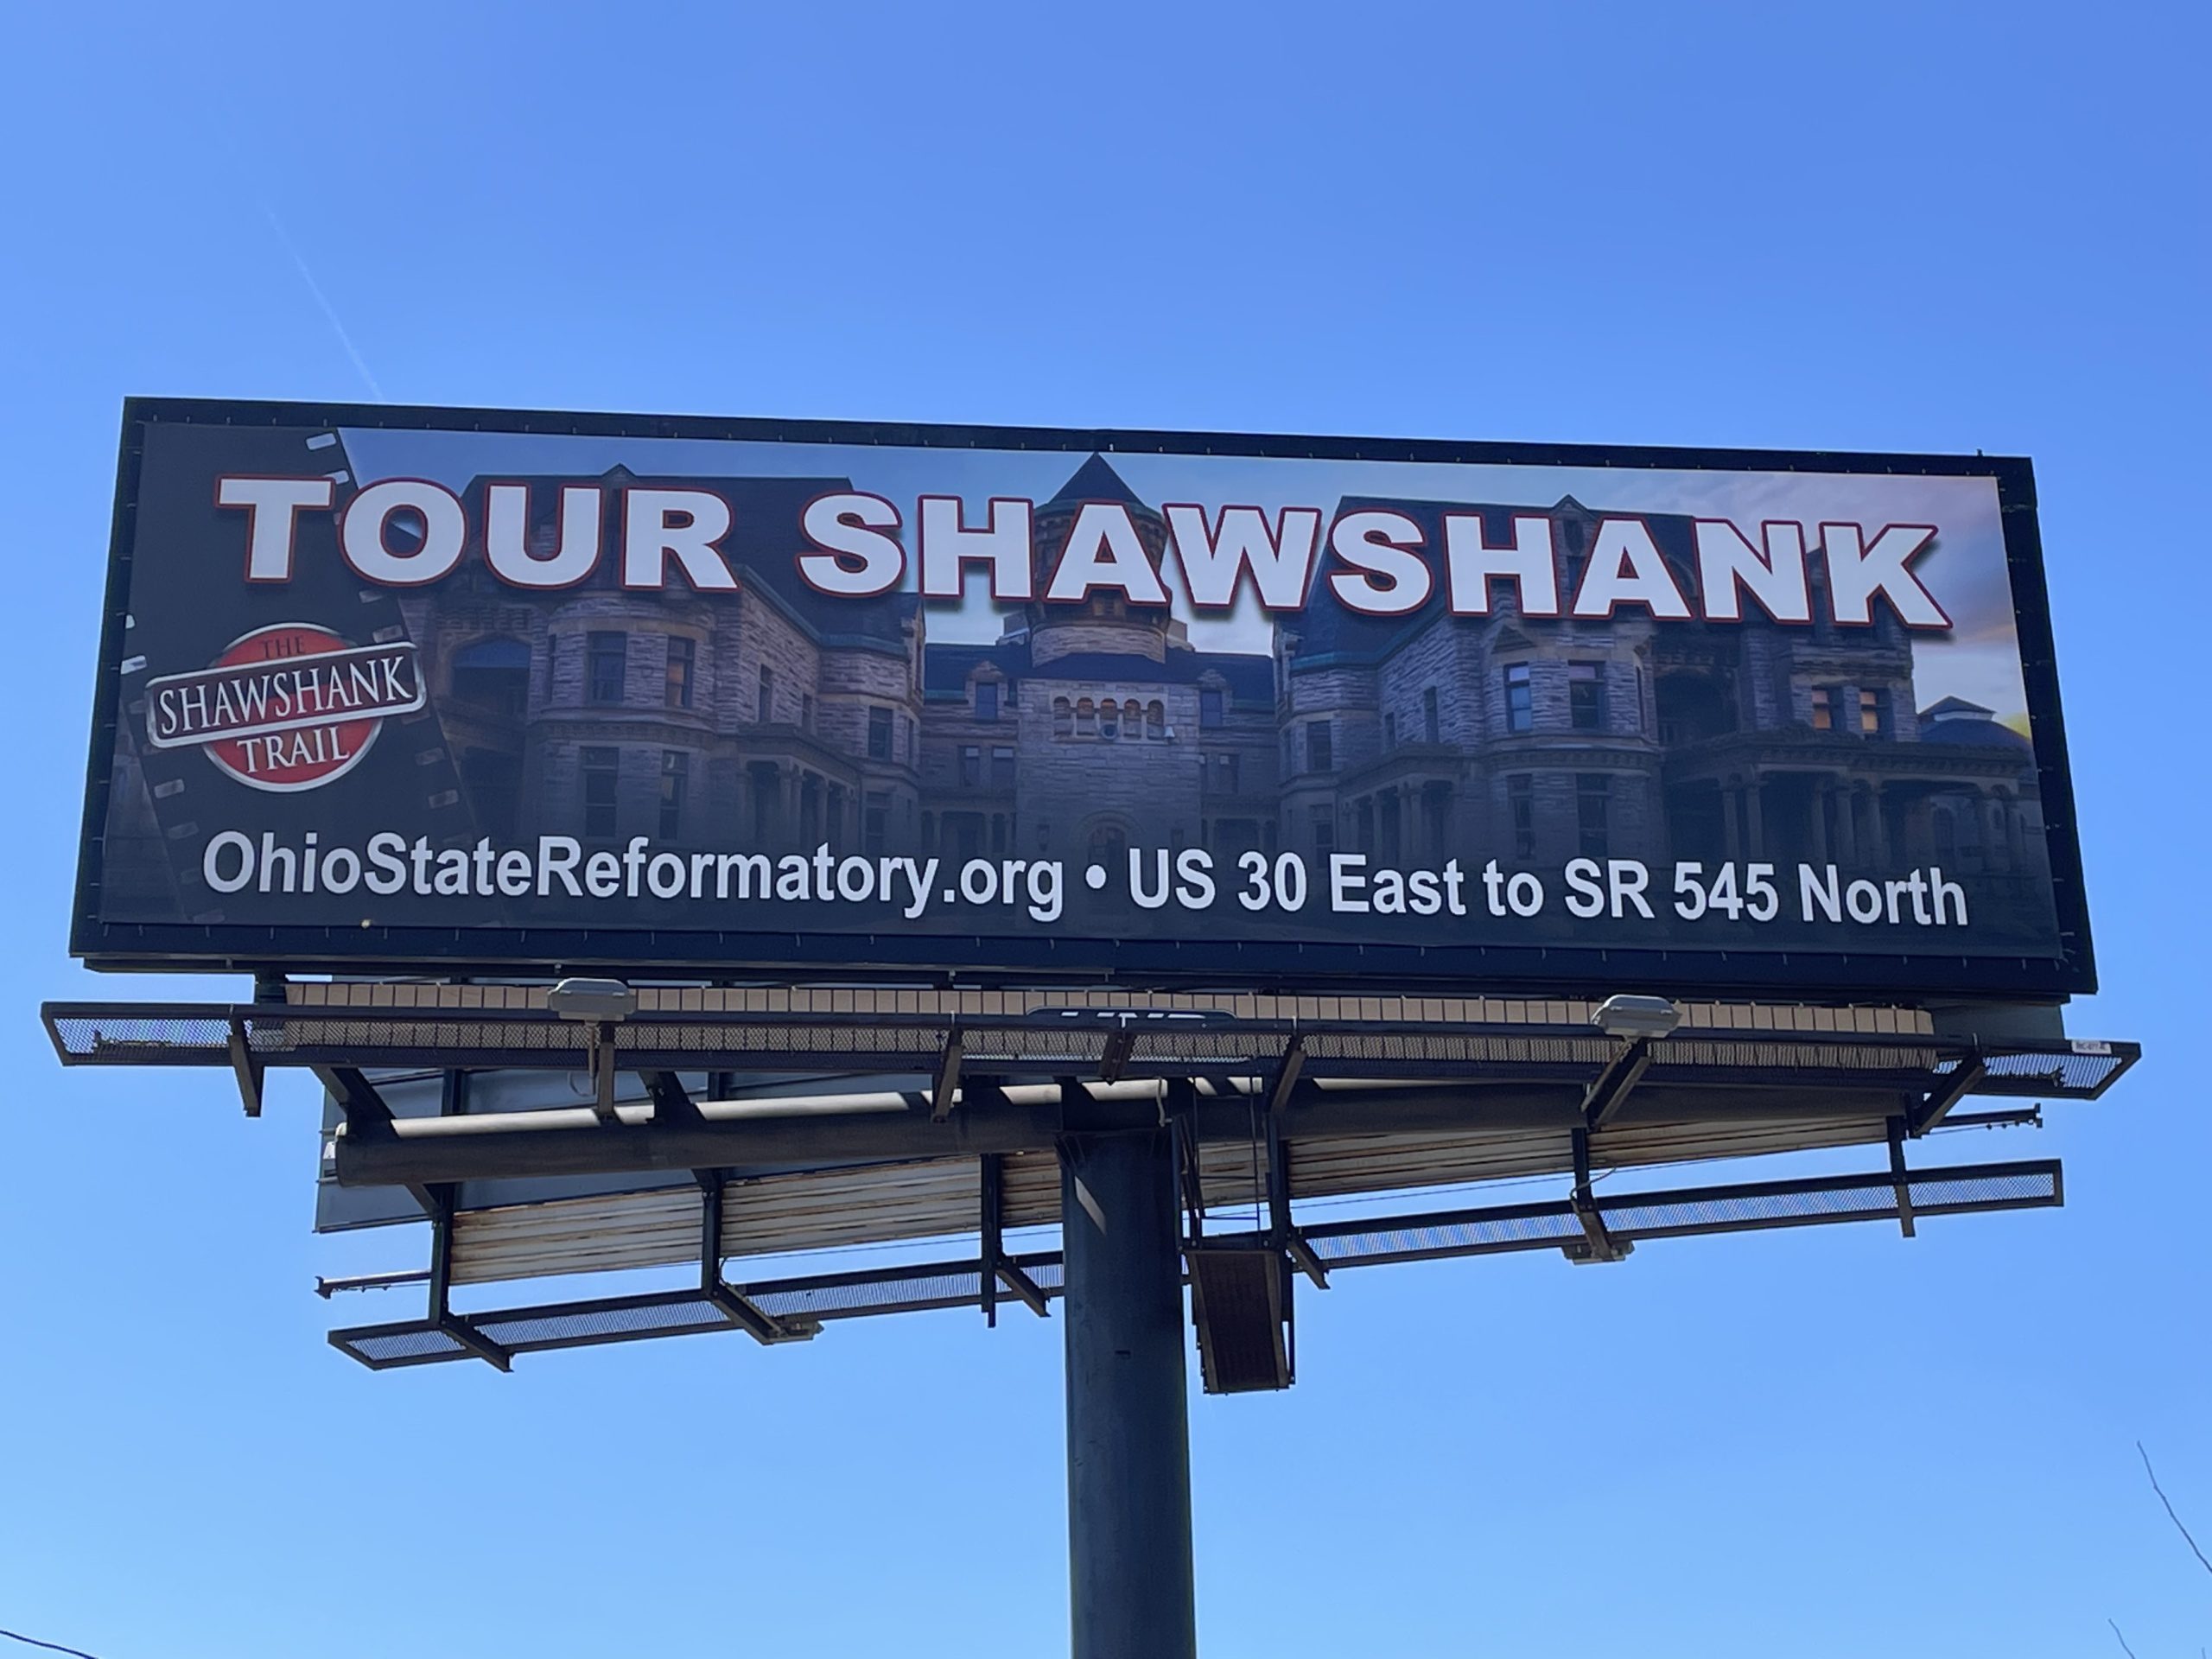 Mansfield Reformatory, Ohio State Reformatory billboard, Shawshank billboard